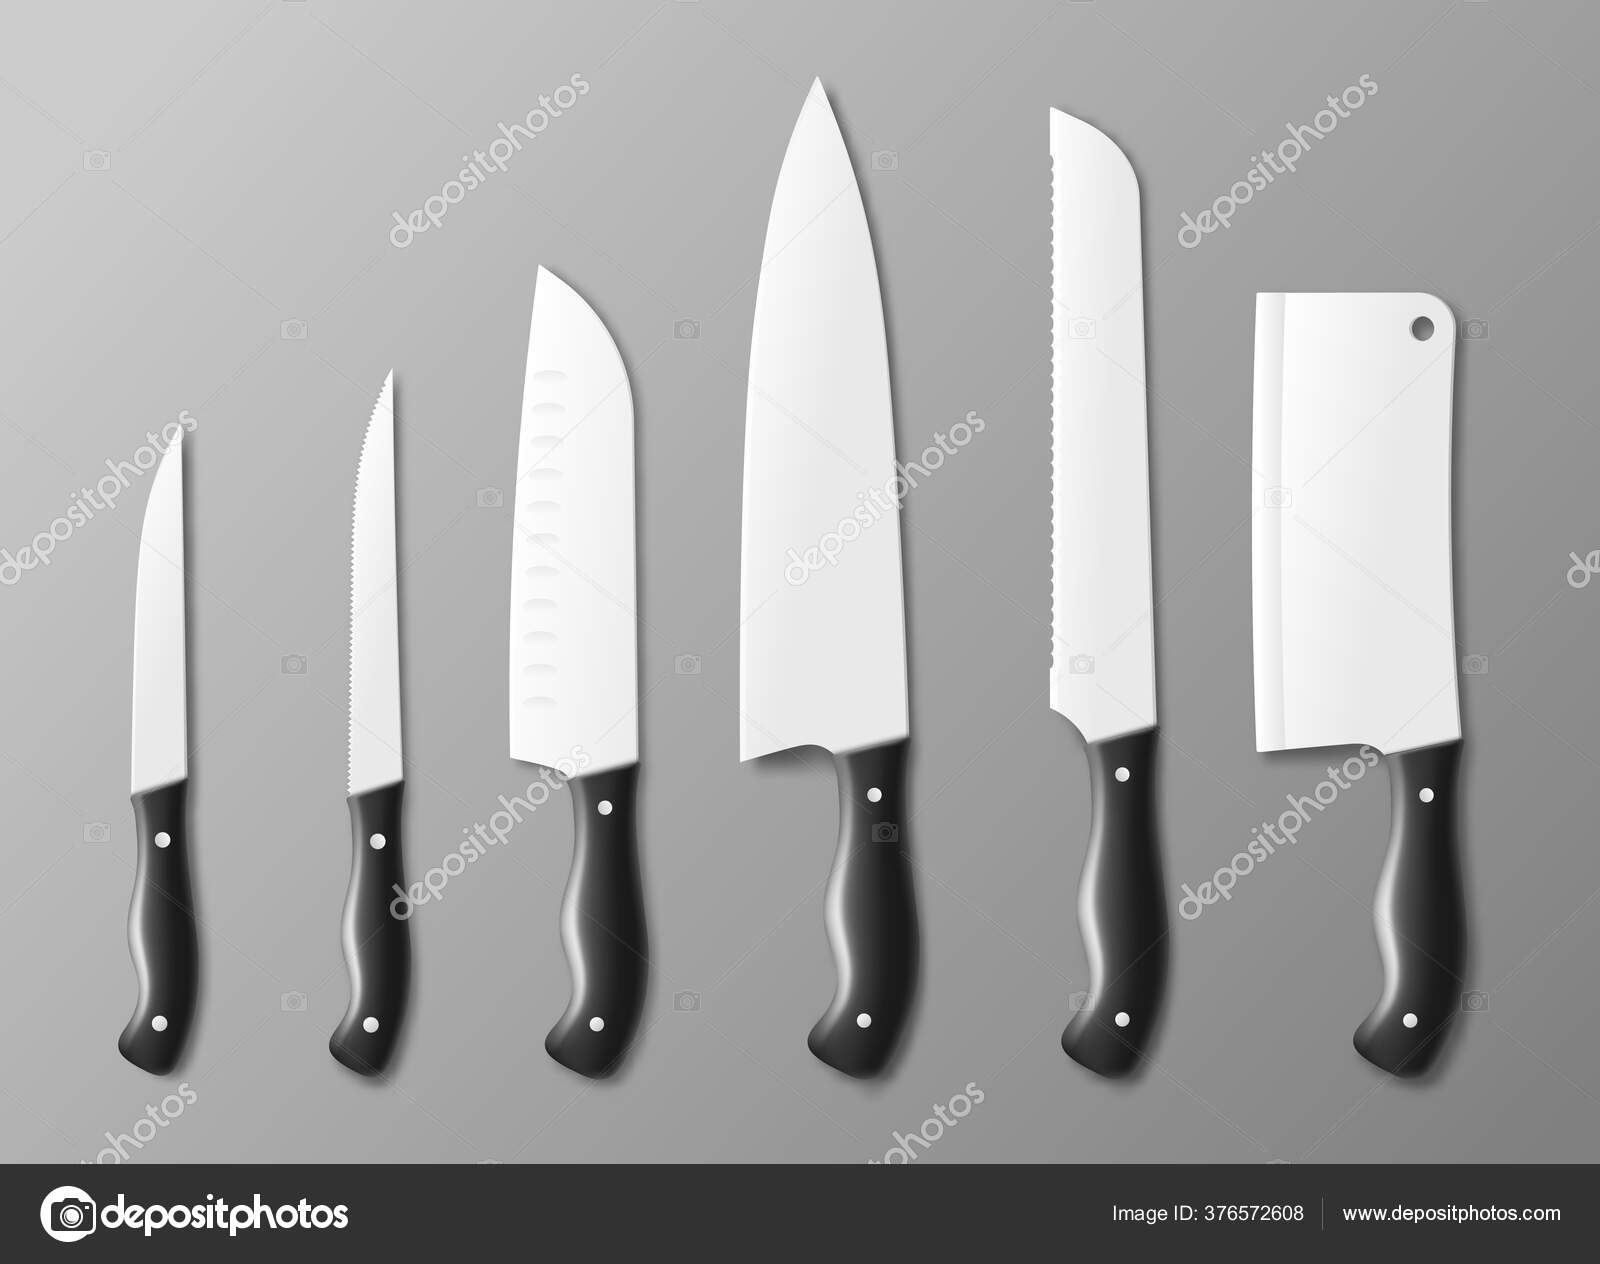 https://st3.depositphotos.com/1832477/37657/v/1600/depositphotos_376572608-stock-illustration-cooking-kitchen-knife-set-templates.jpg